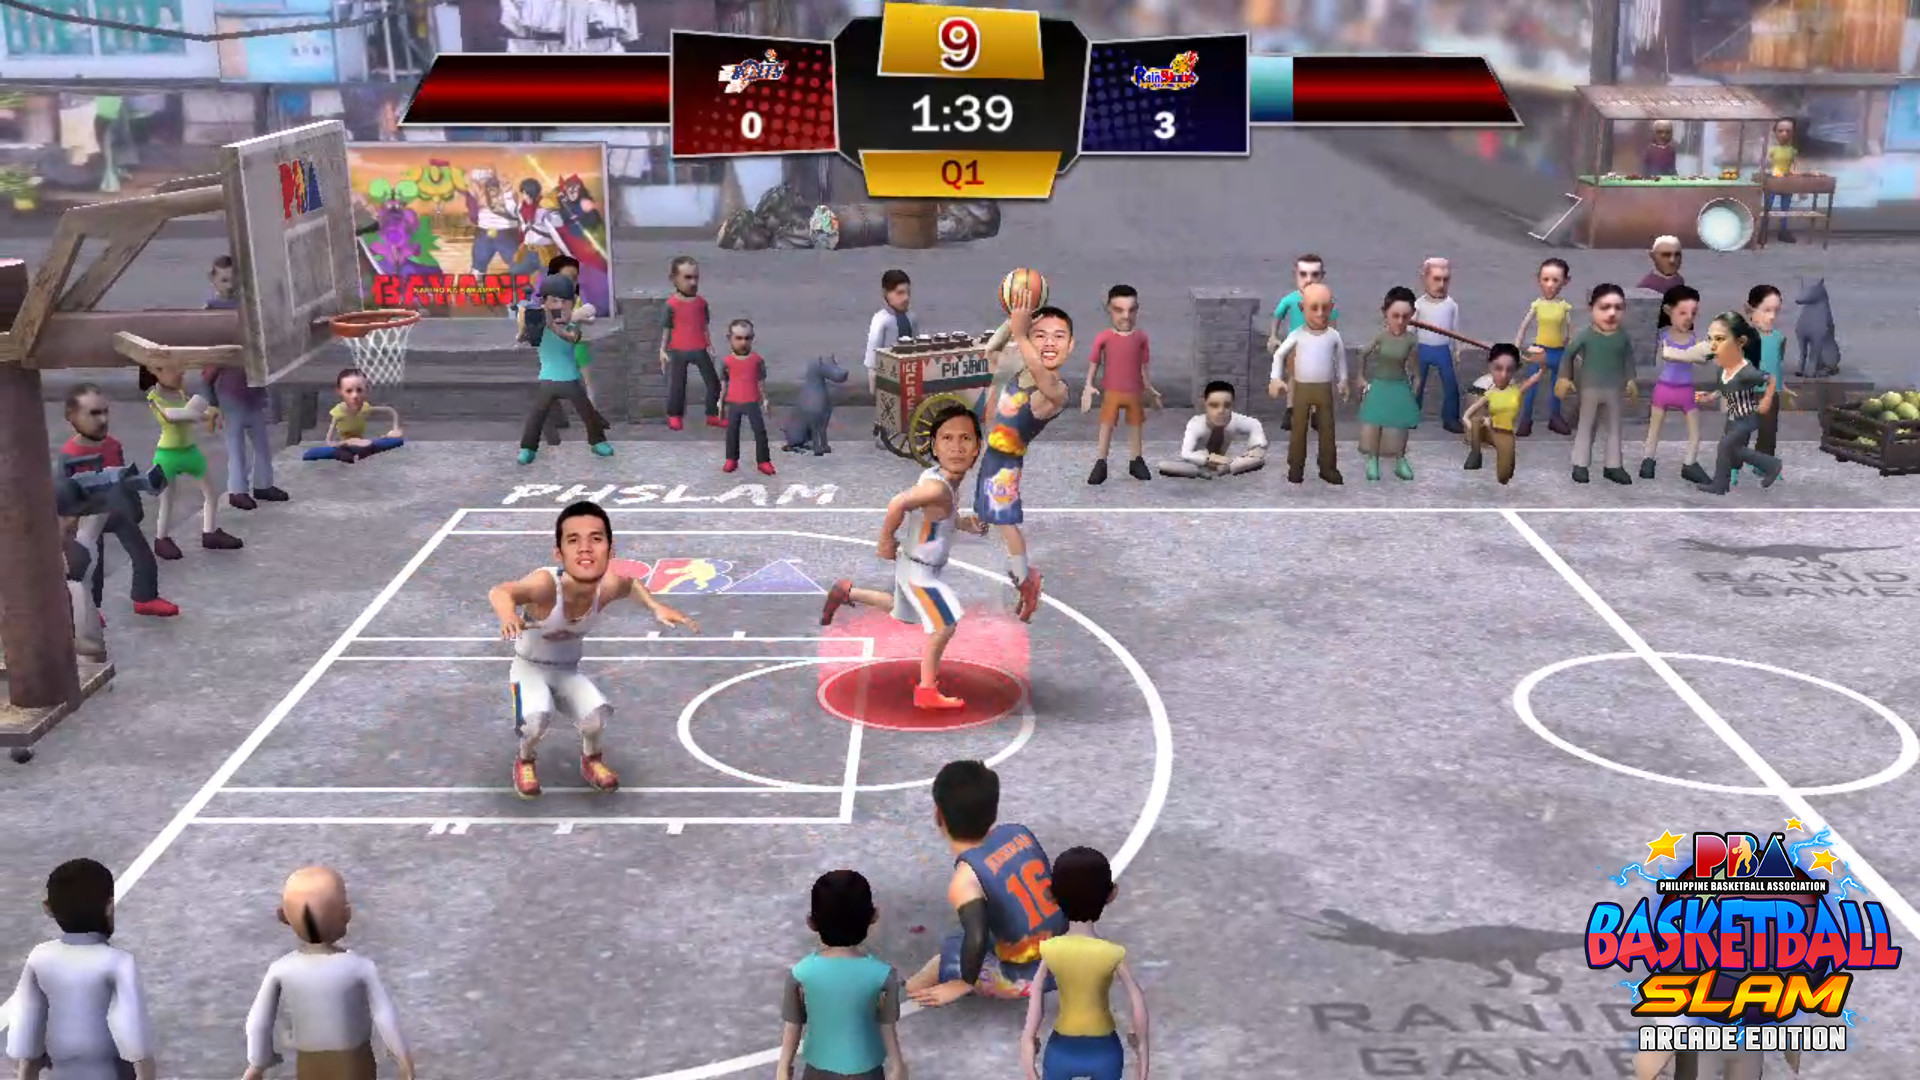 PBA Basketball Slam: Arcade Edition screenshot